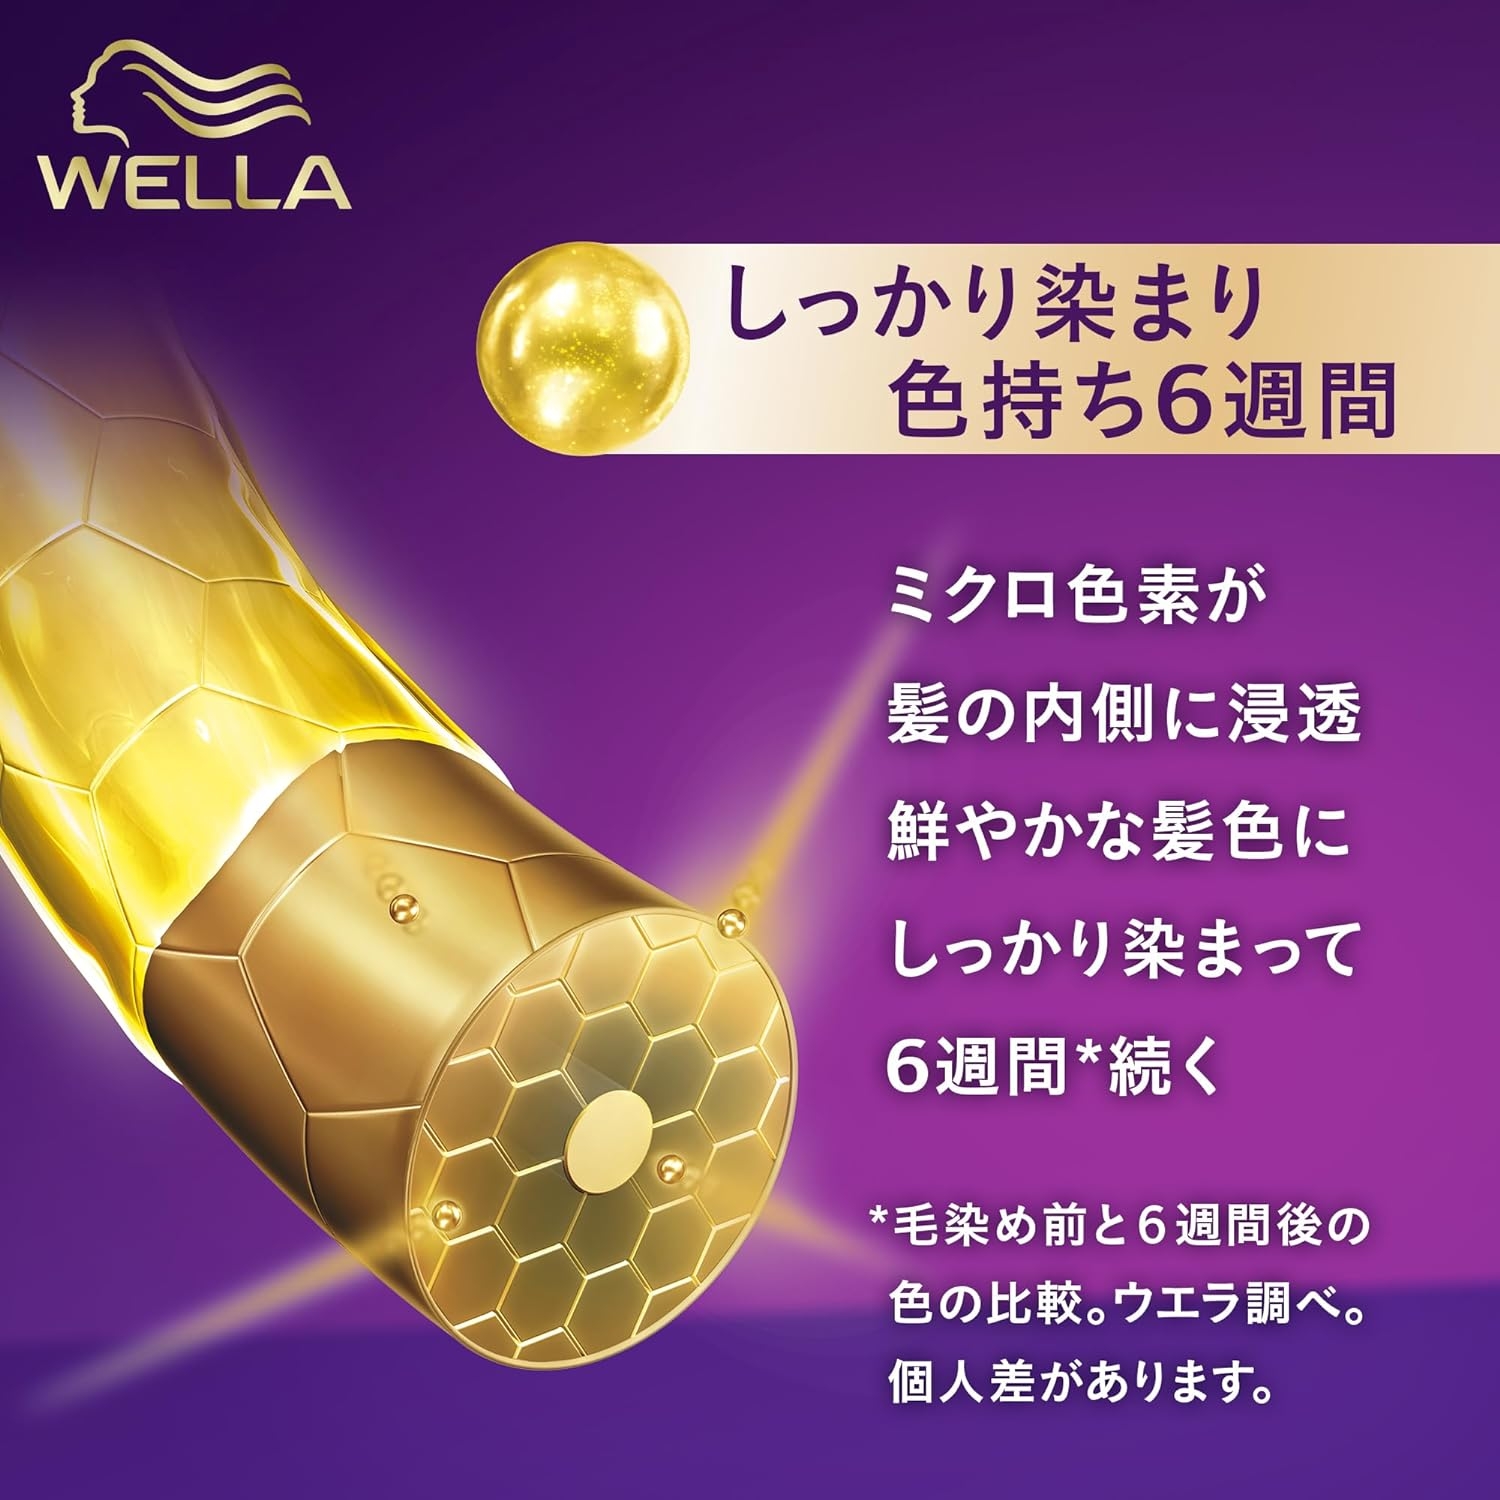 WELLA(ウエラ) トーン2+1 クリームタイプの商品画像10 